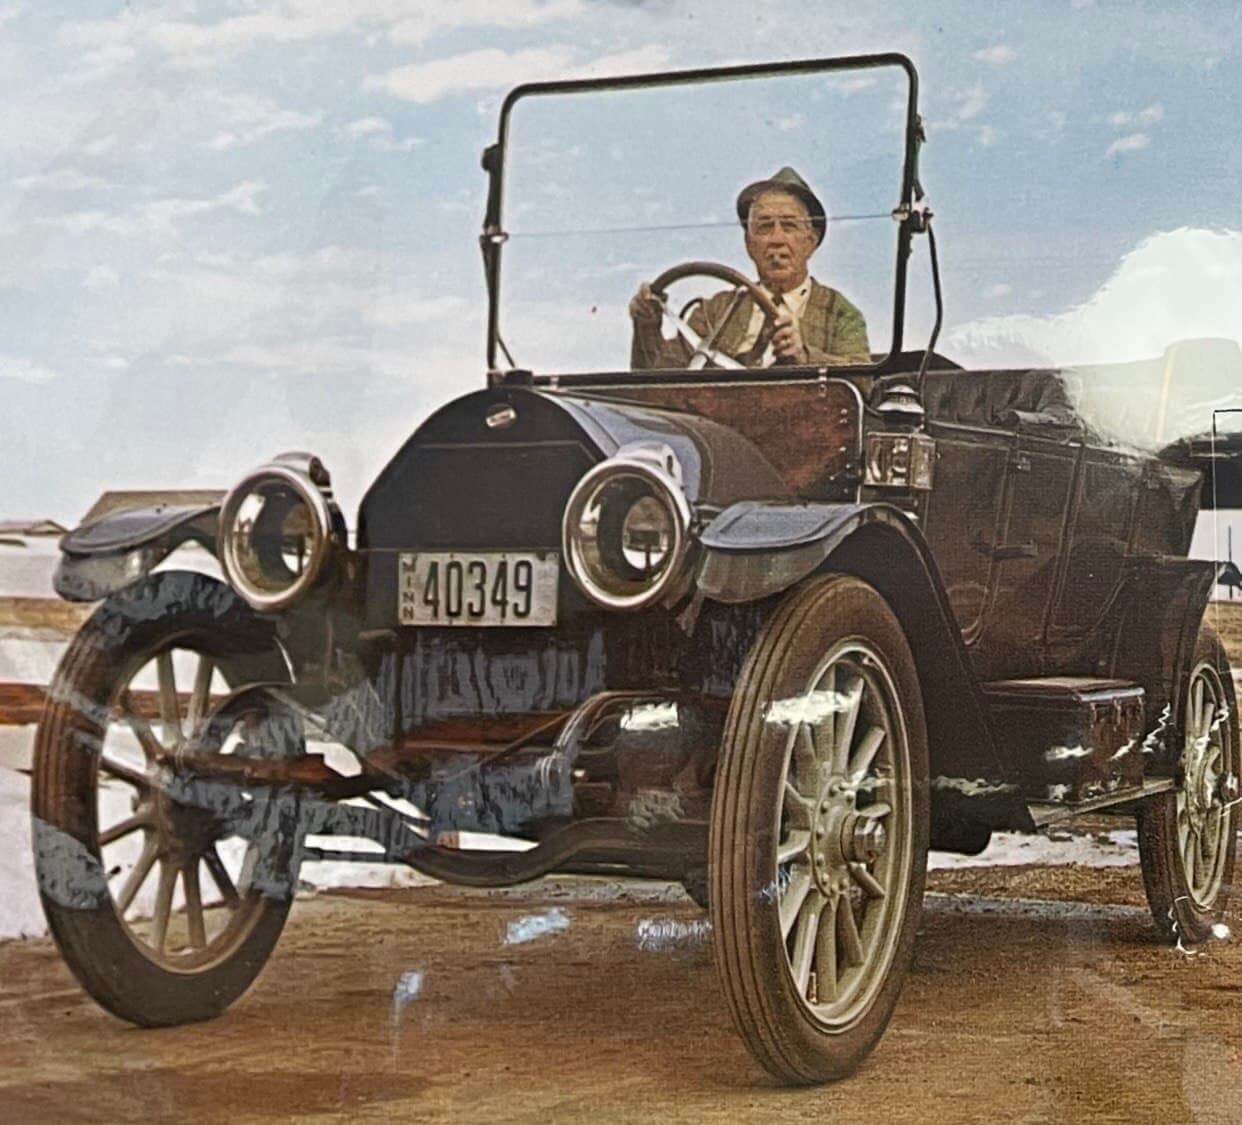 Dick Geisler in his Model T Ford